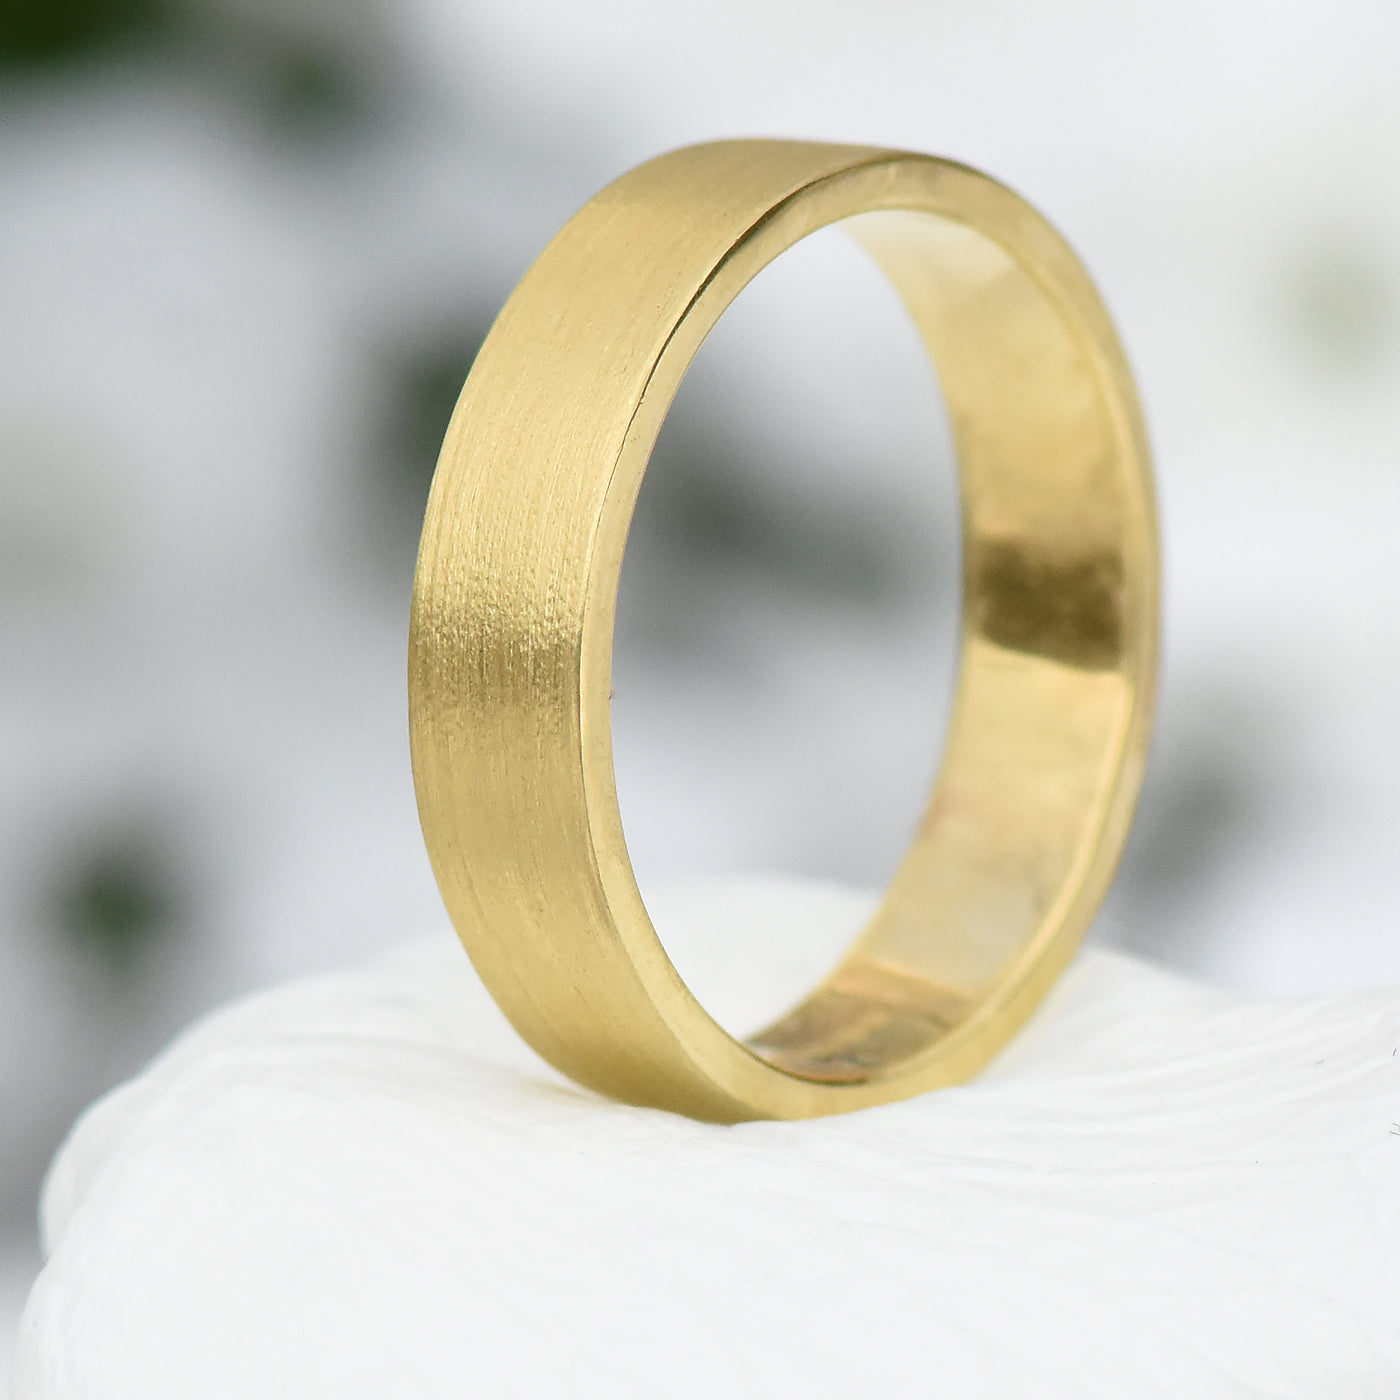 5mm flat profile wedding ring